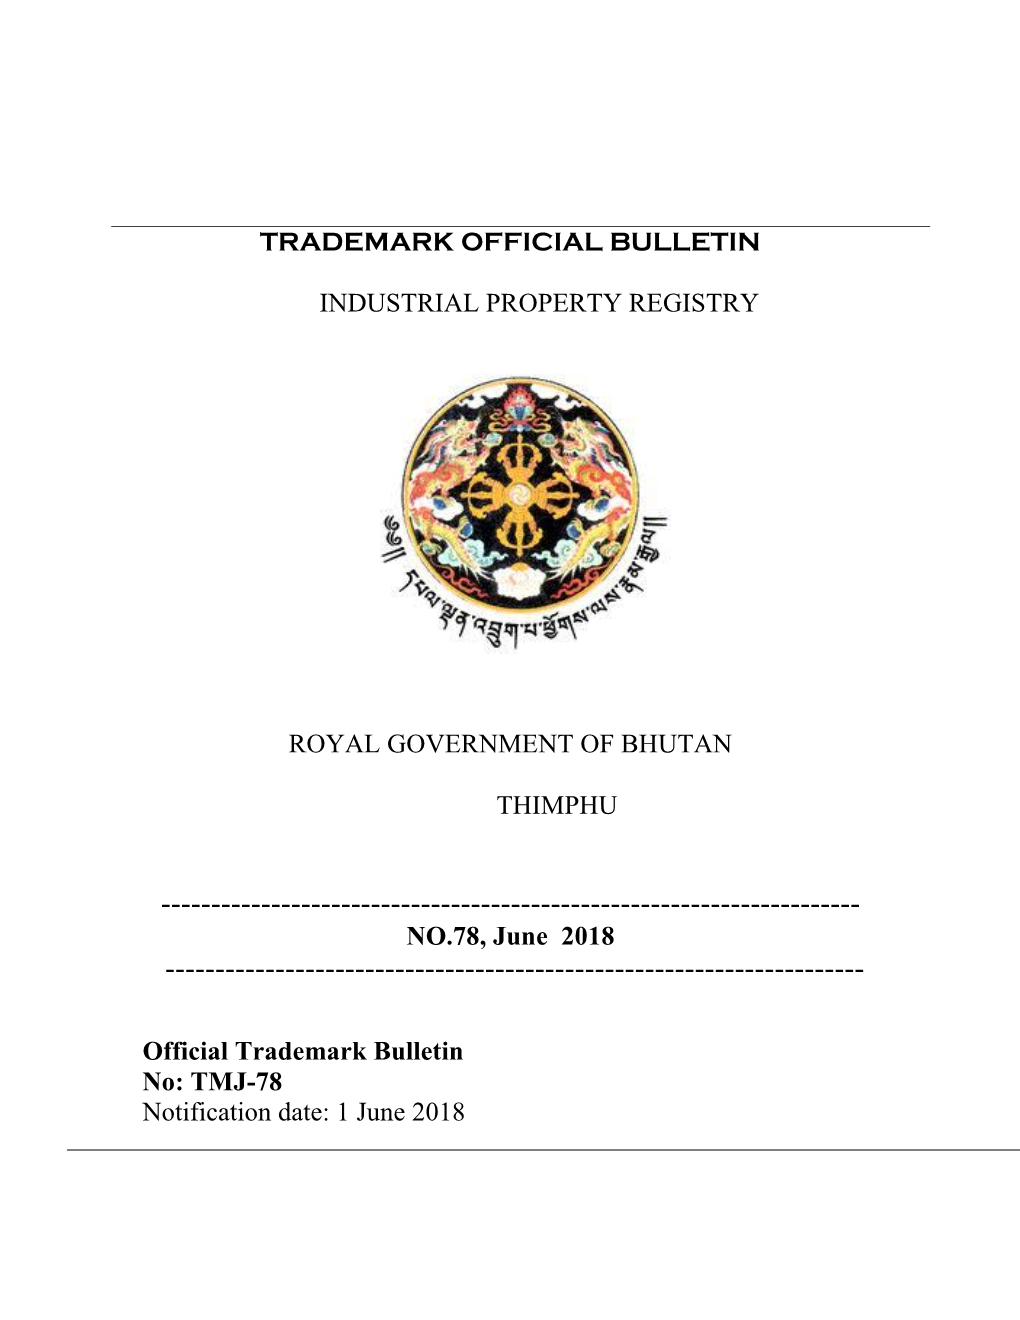 Trademark Official Bulletin Industrial Property Registry Royal